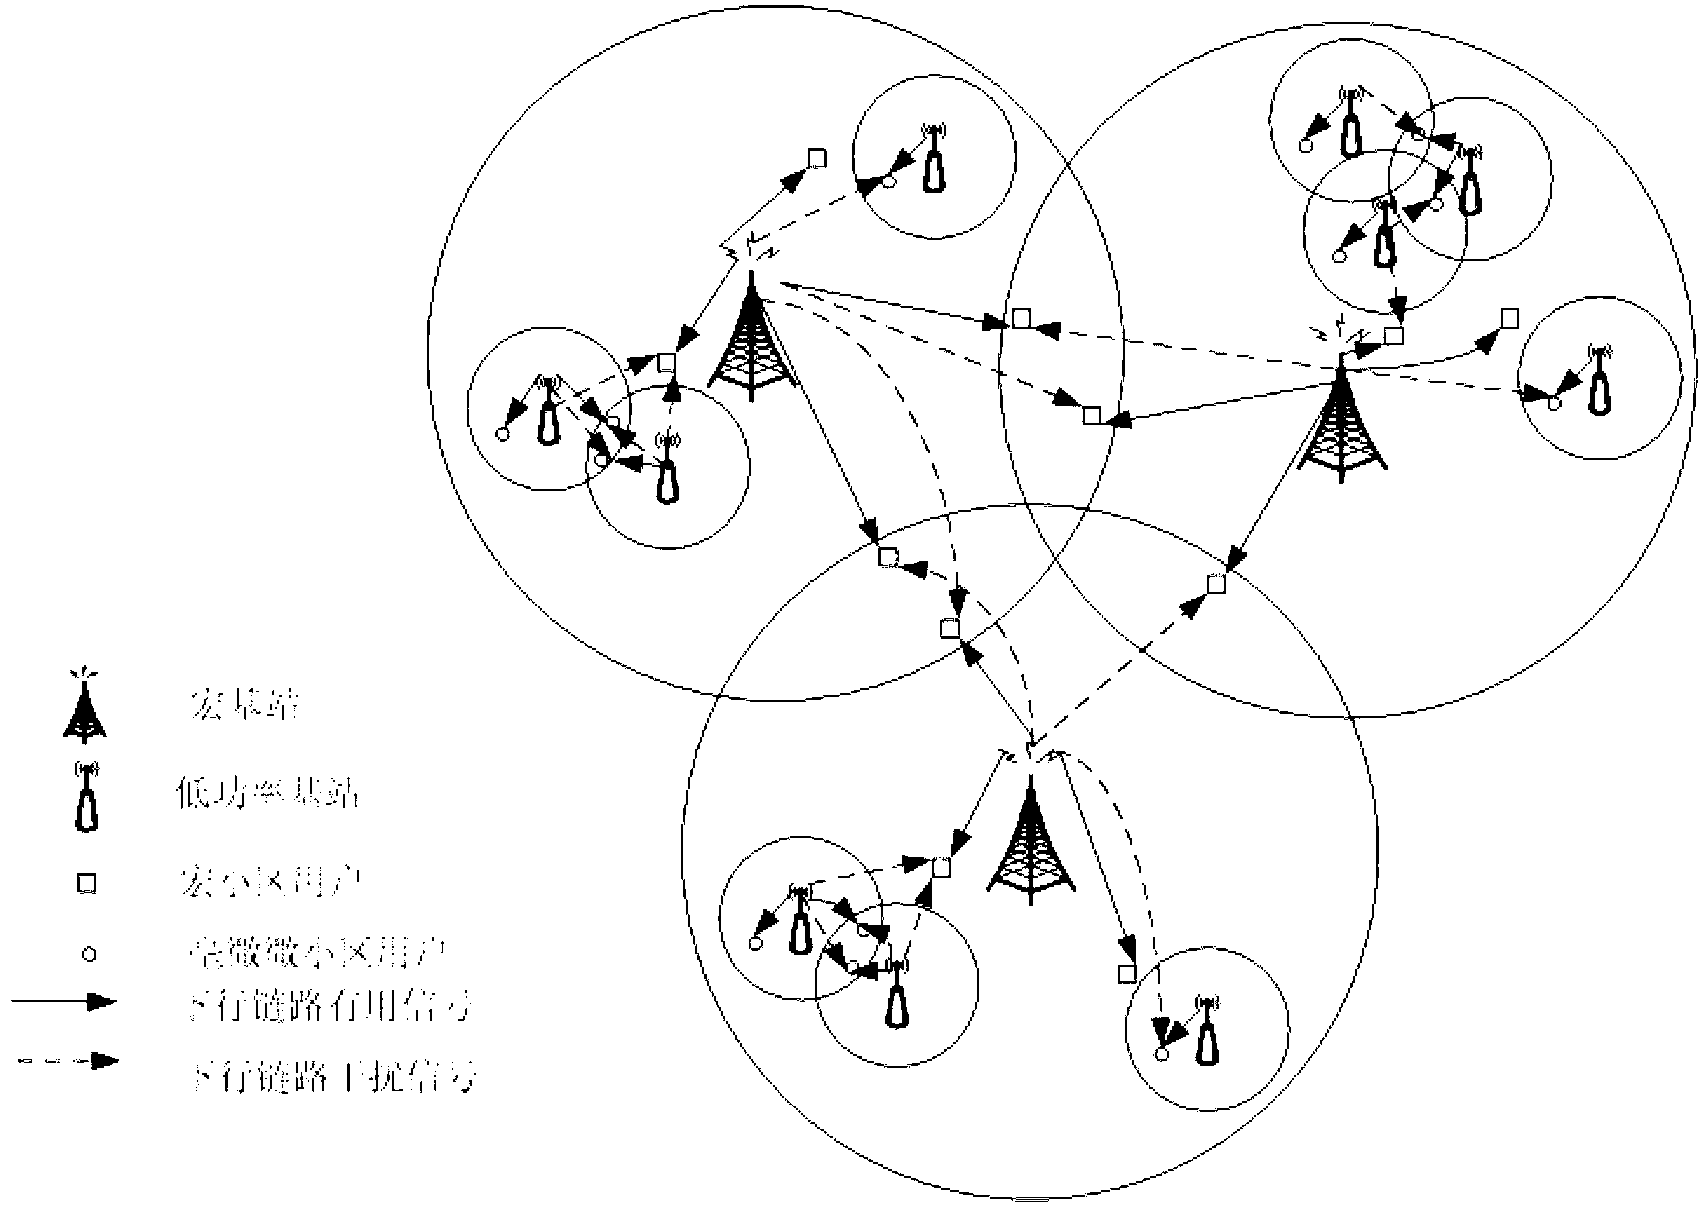 Downlink chain resource allocation method for heterogeneous network